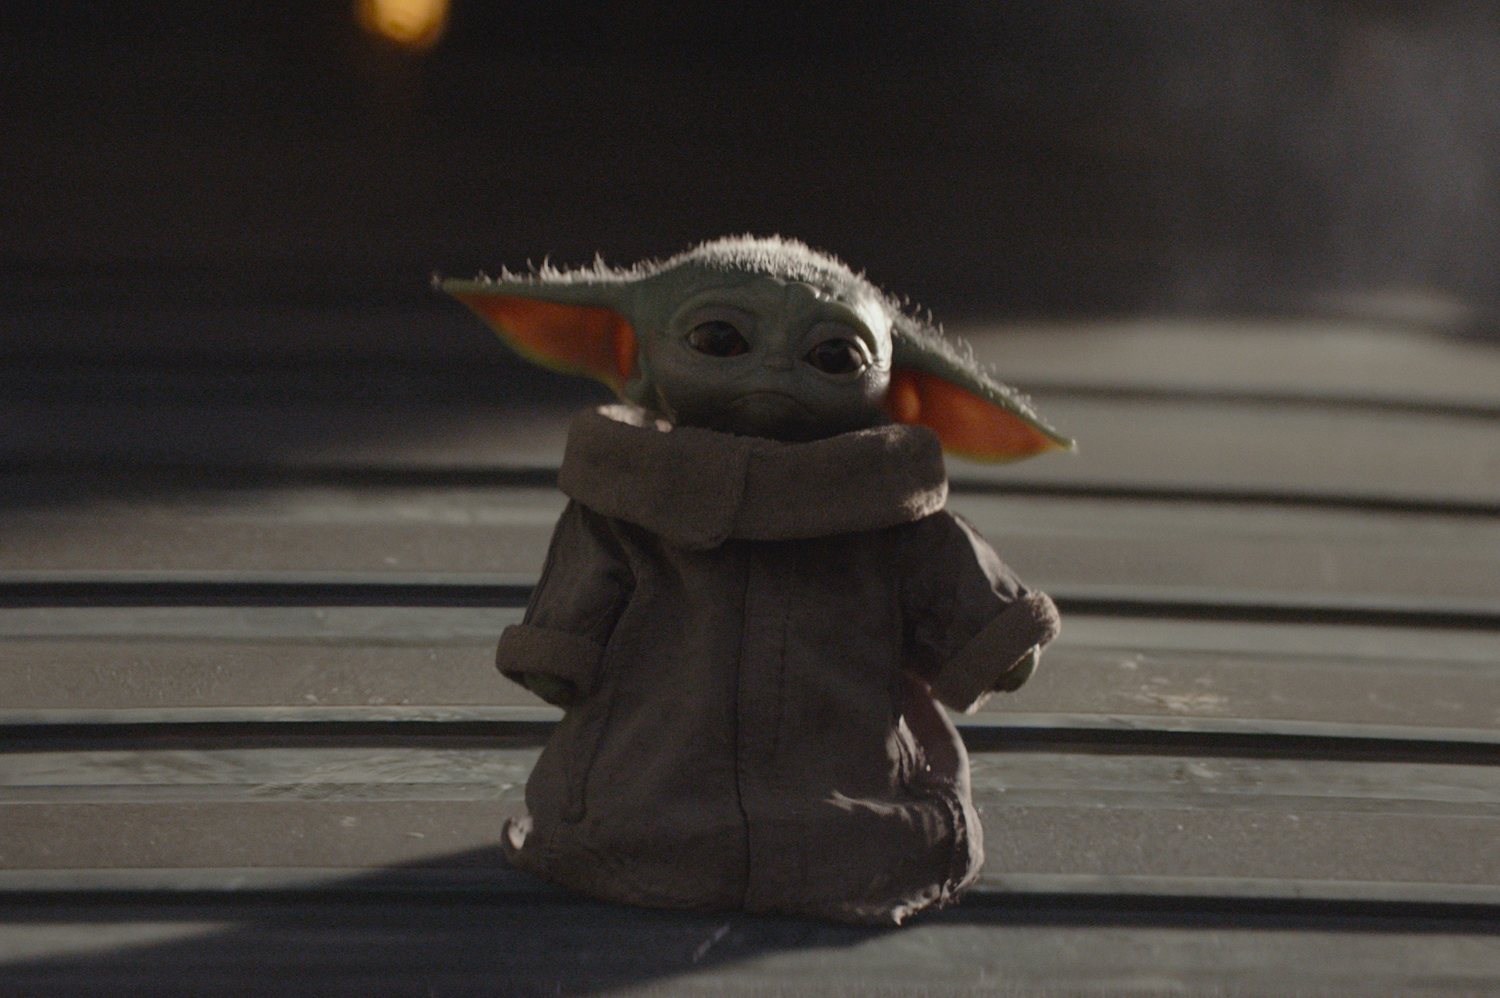 A Brief Timeline of Baby Yoda